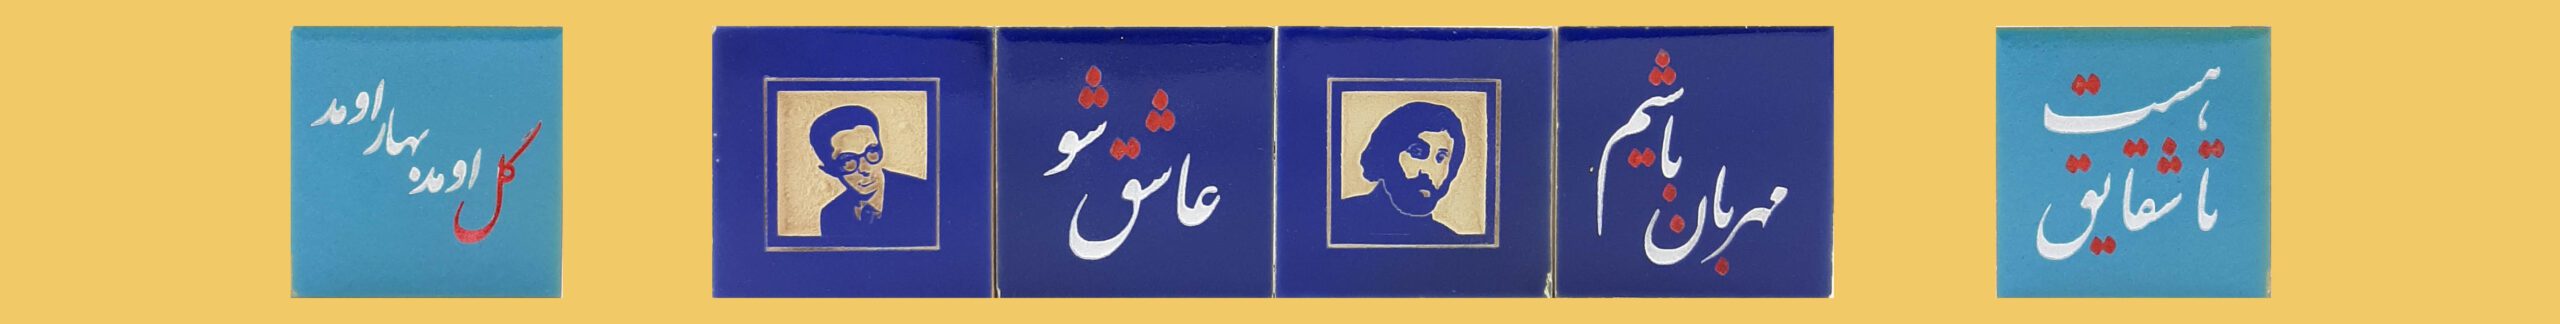 banner long down kashi scaled - فیروزه کوبی صنایع دستی اصفهان